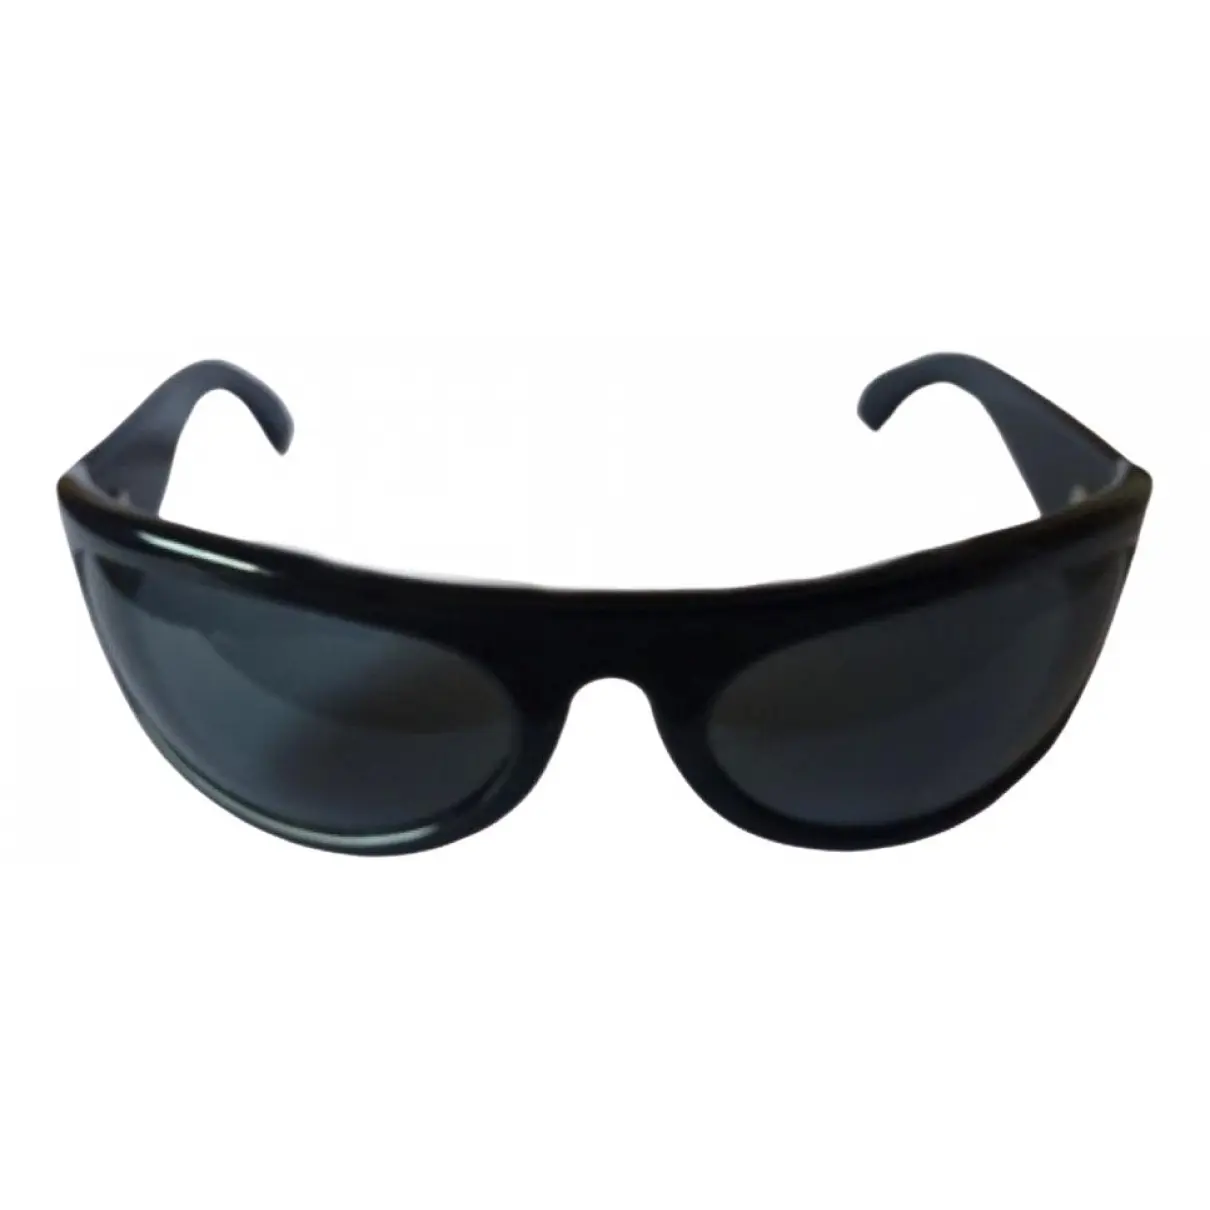 Sunglasses Cutler & Gross - Vintage